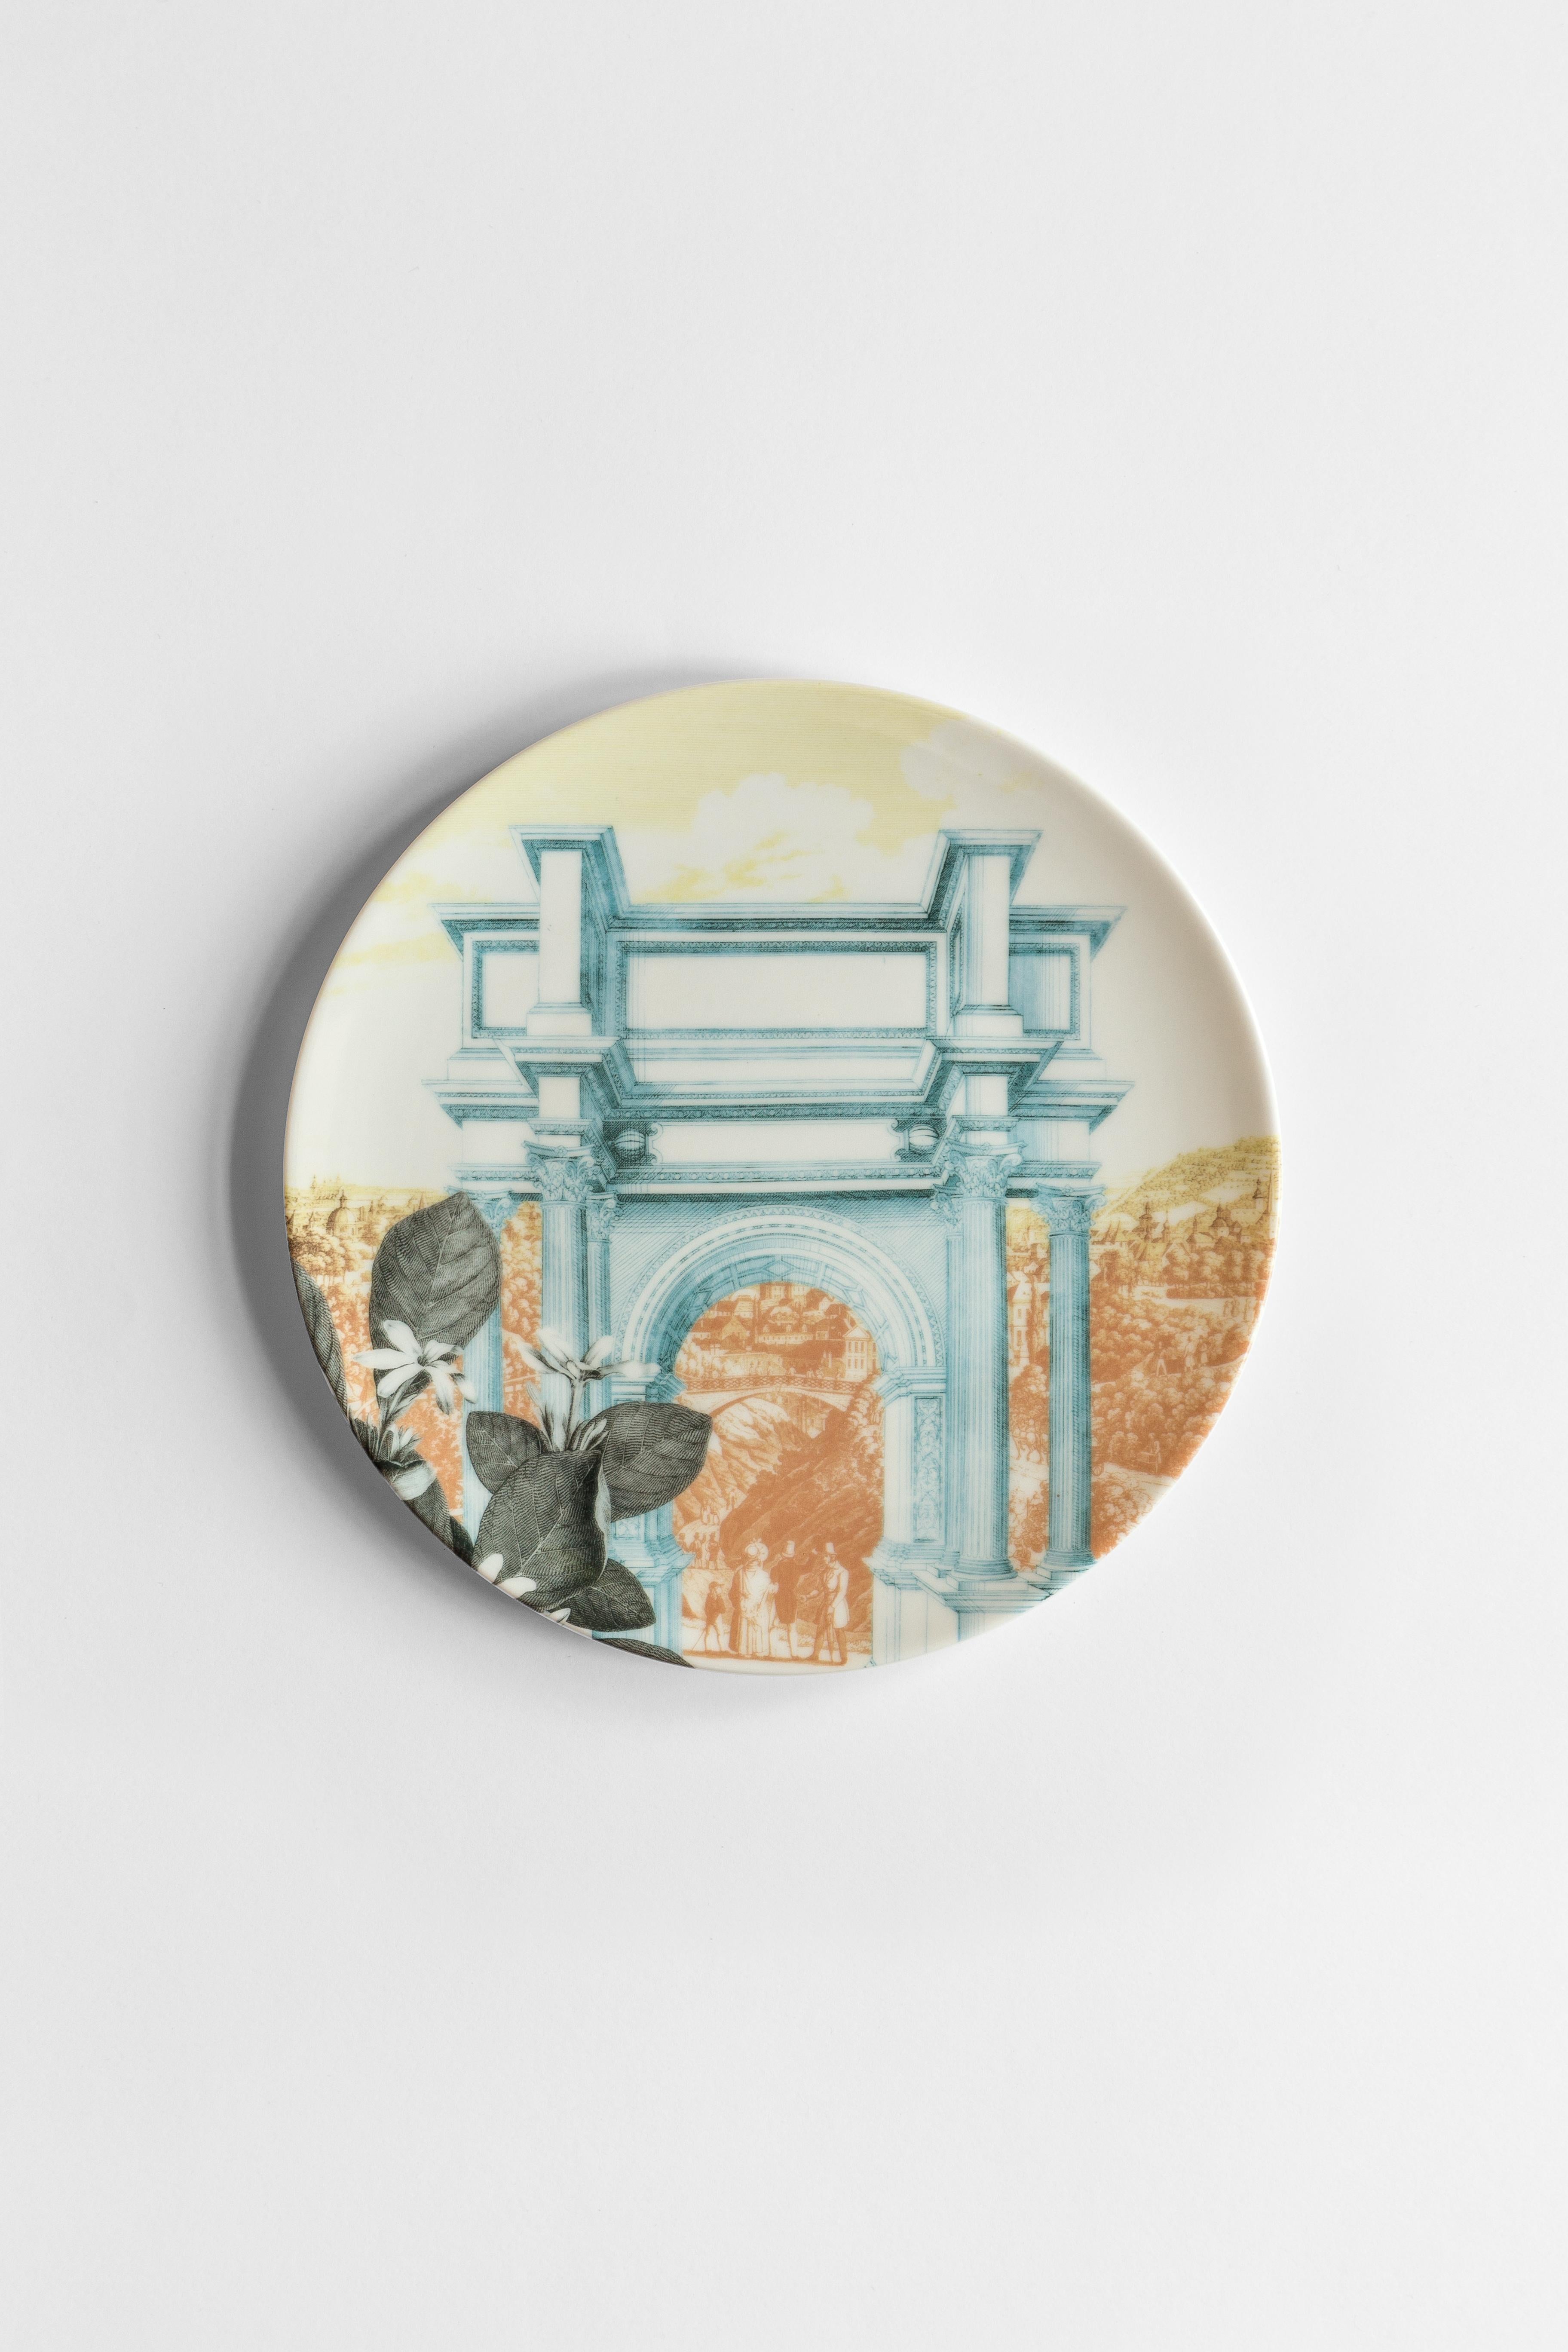 Mediterraneo, Six Contemporary Porcelain Dessert Plates with Decorative Design For Sale 1